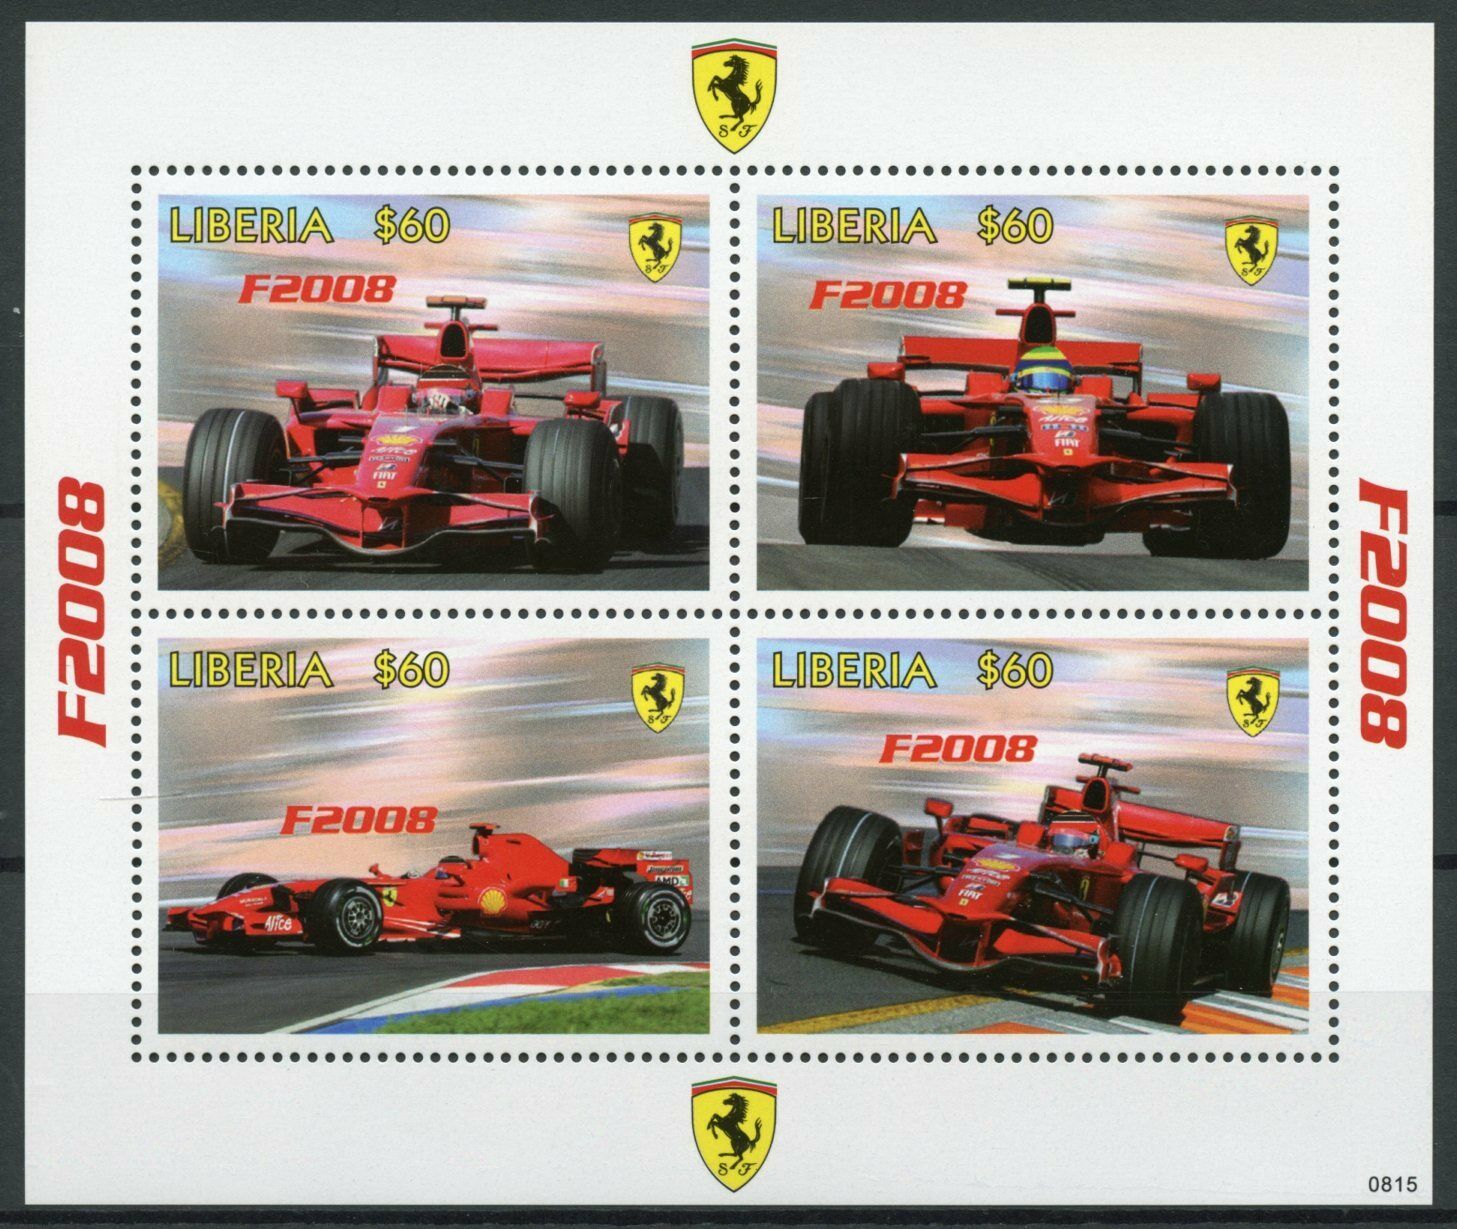 Liberia 2008 MNH Cars Stamps Ferrari F1 Formula 1 F2008 Sports 4v M/S